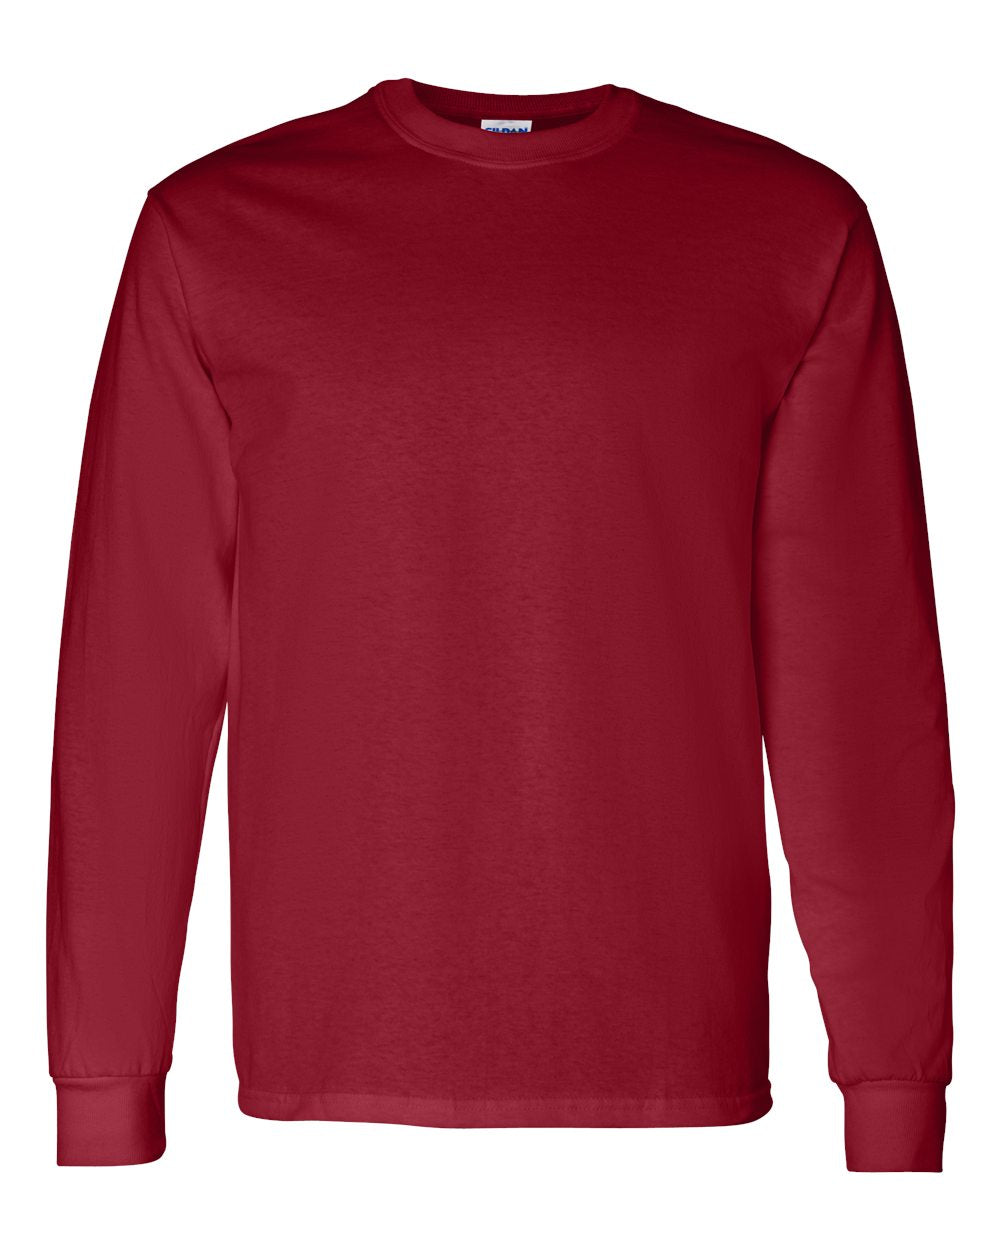 Pretreated Gildan 5400 Heavy Cotton Long Sleeve T-Shirt - Garnet